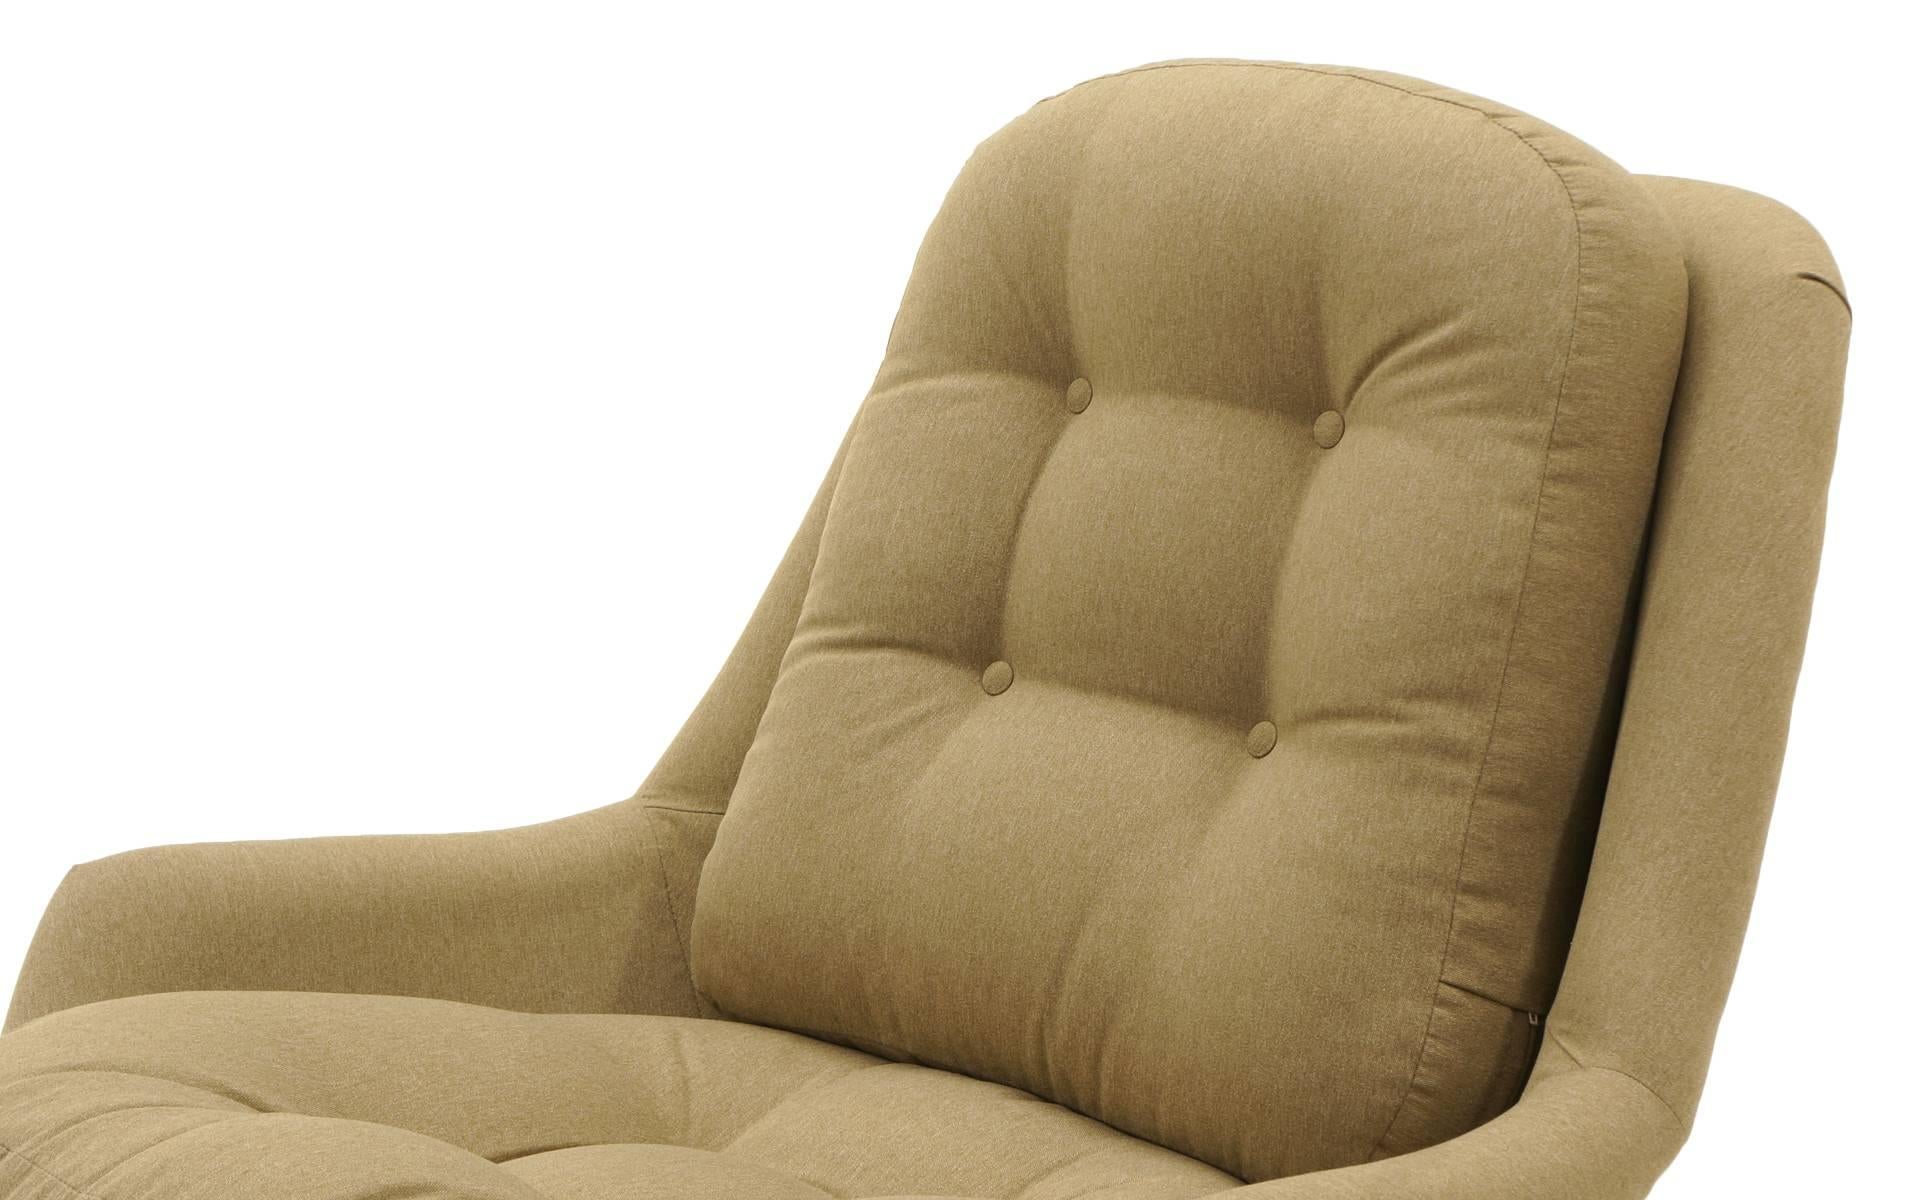 Late 20th Century Milo Baughman Swivel Lounge Chair, Fiberglass Shell and New Upholstery